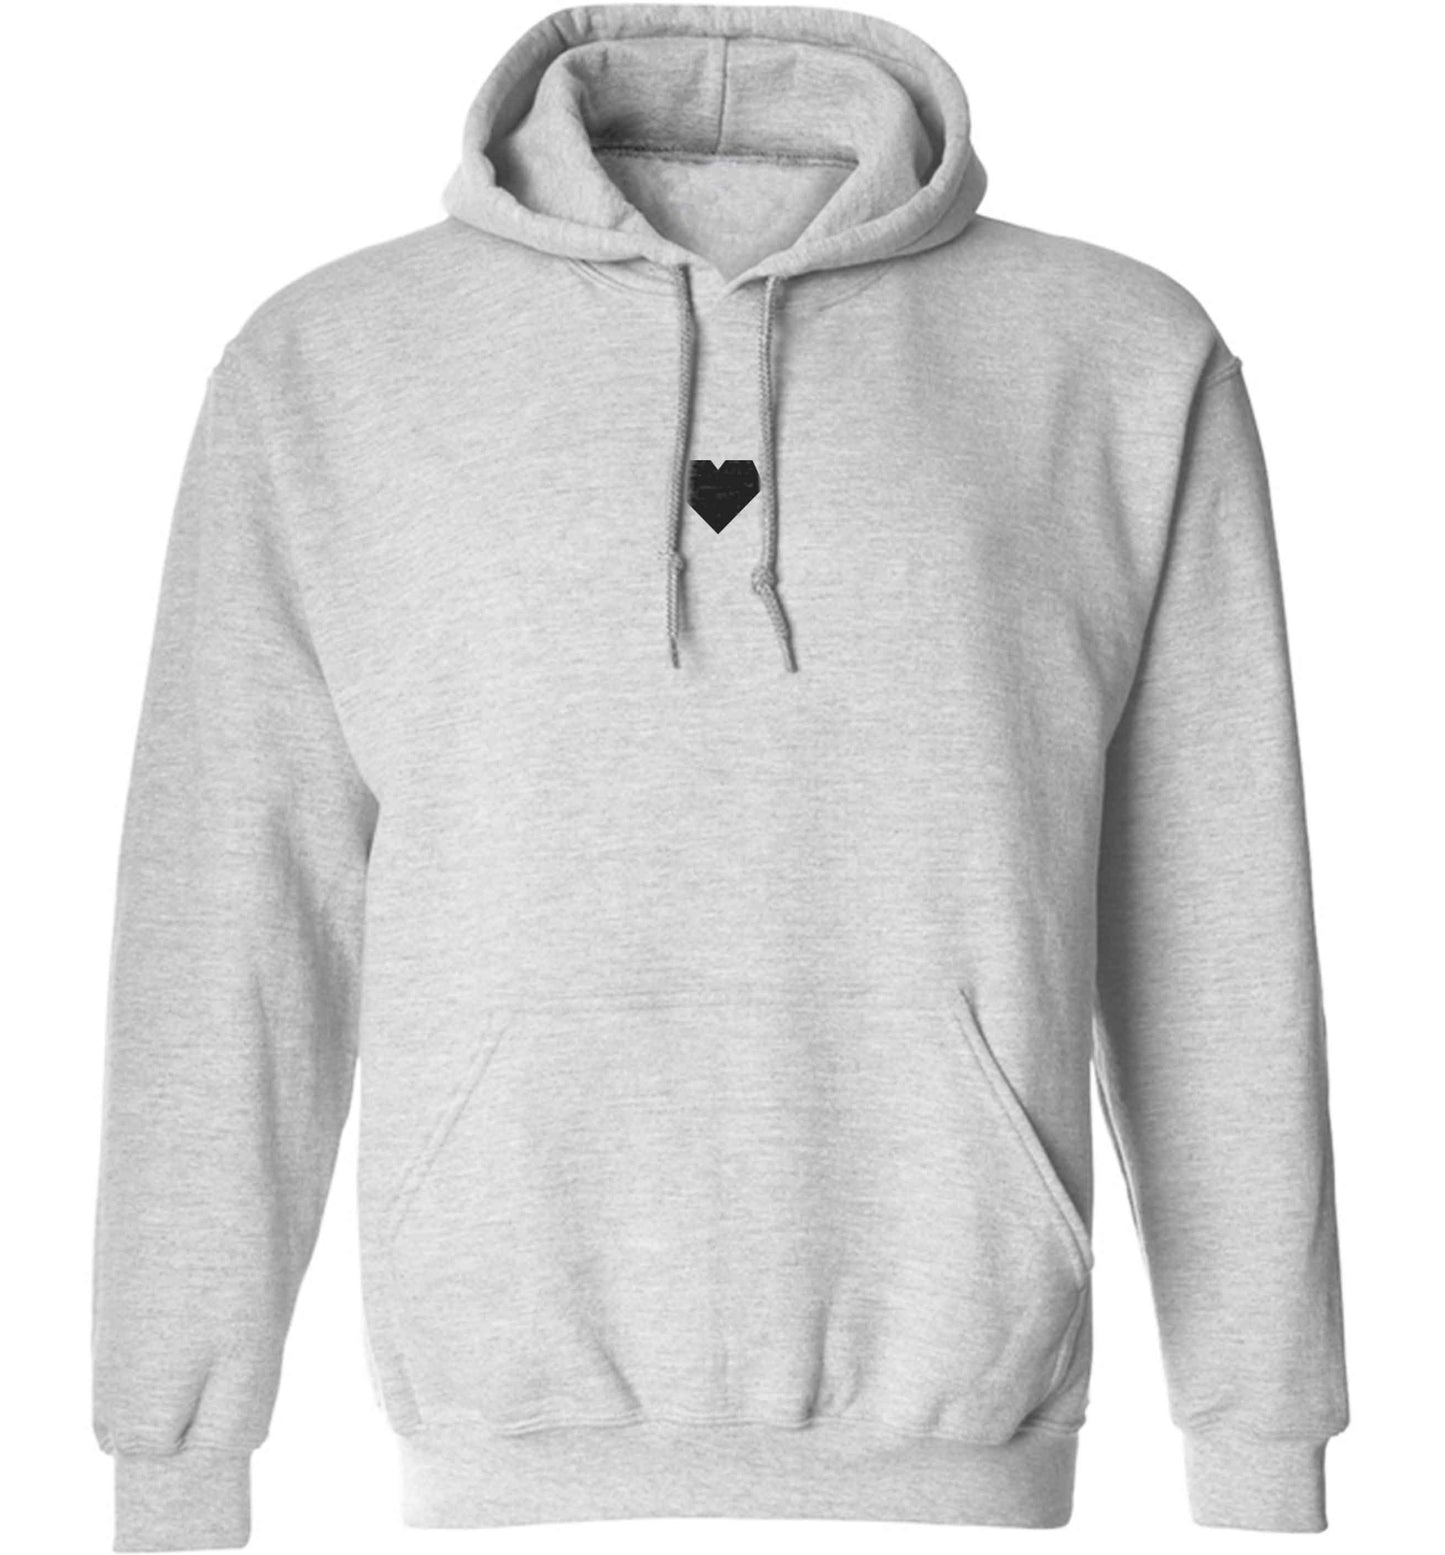 Tiny heart adults unisex grey hoodie 2XL